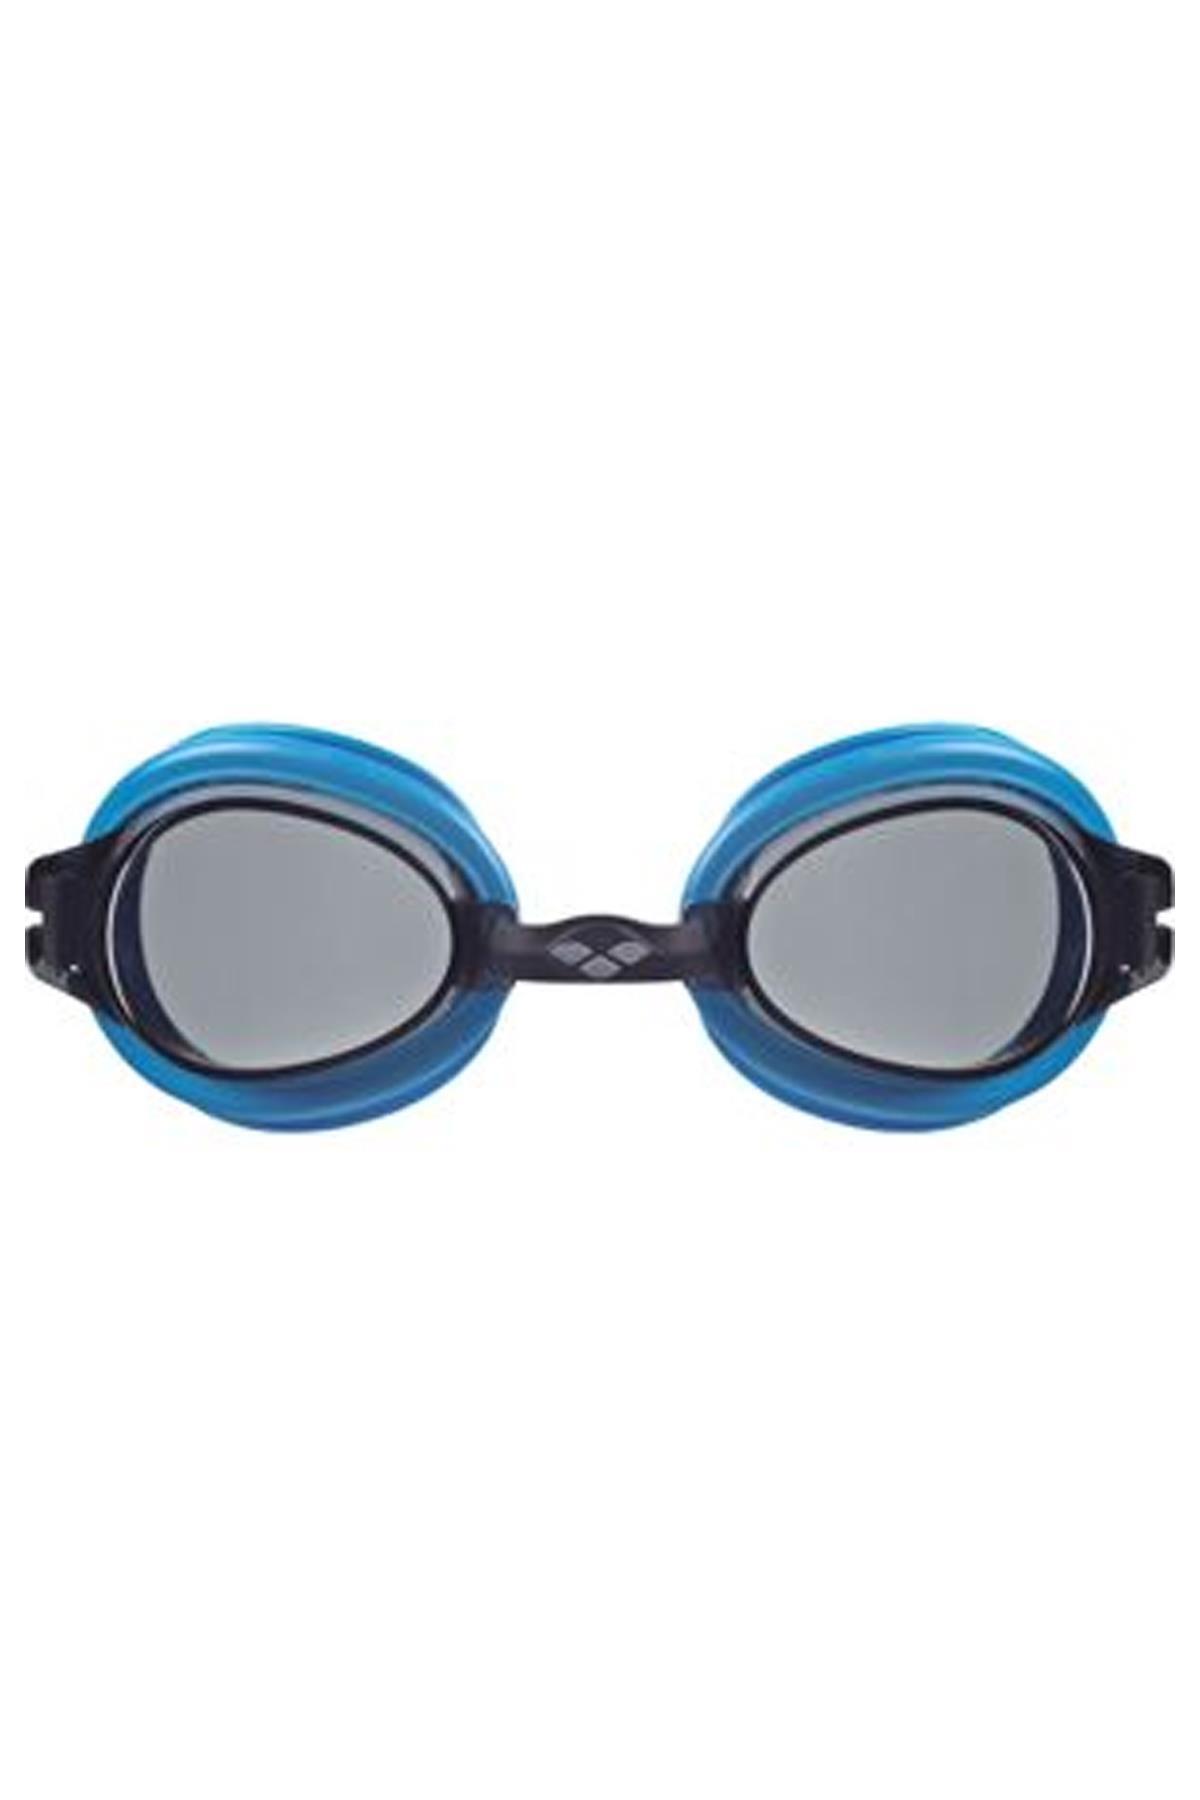 Arena - Bubble 3 Jr عینک شنای کودکان